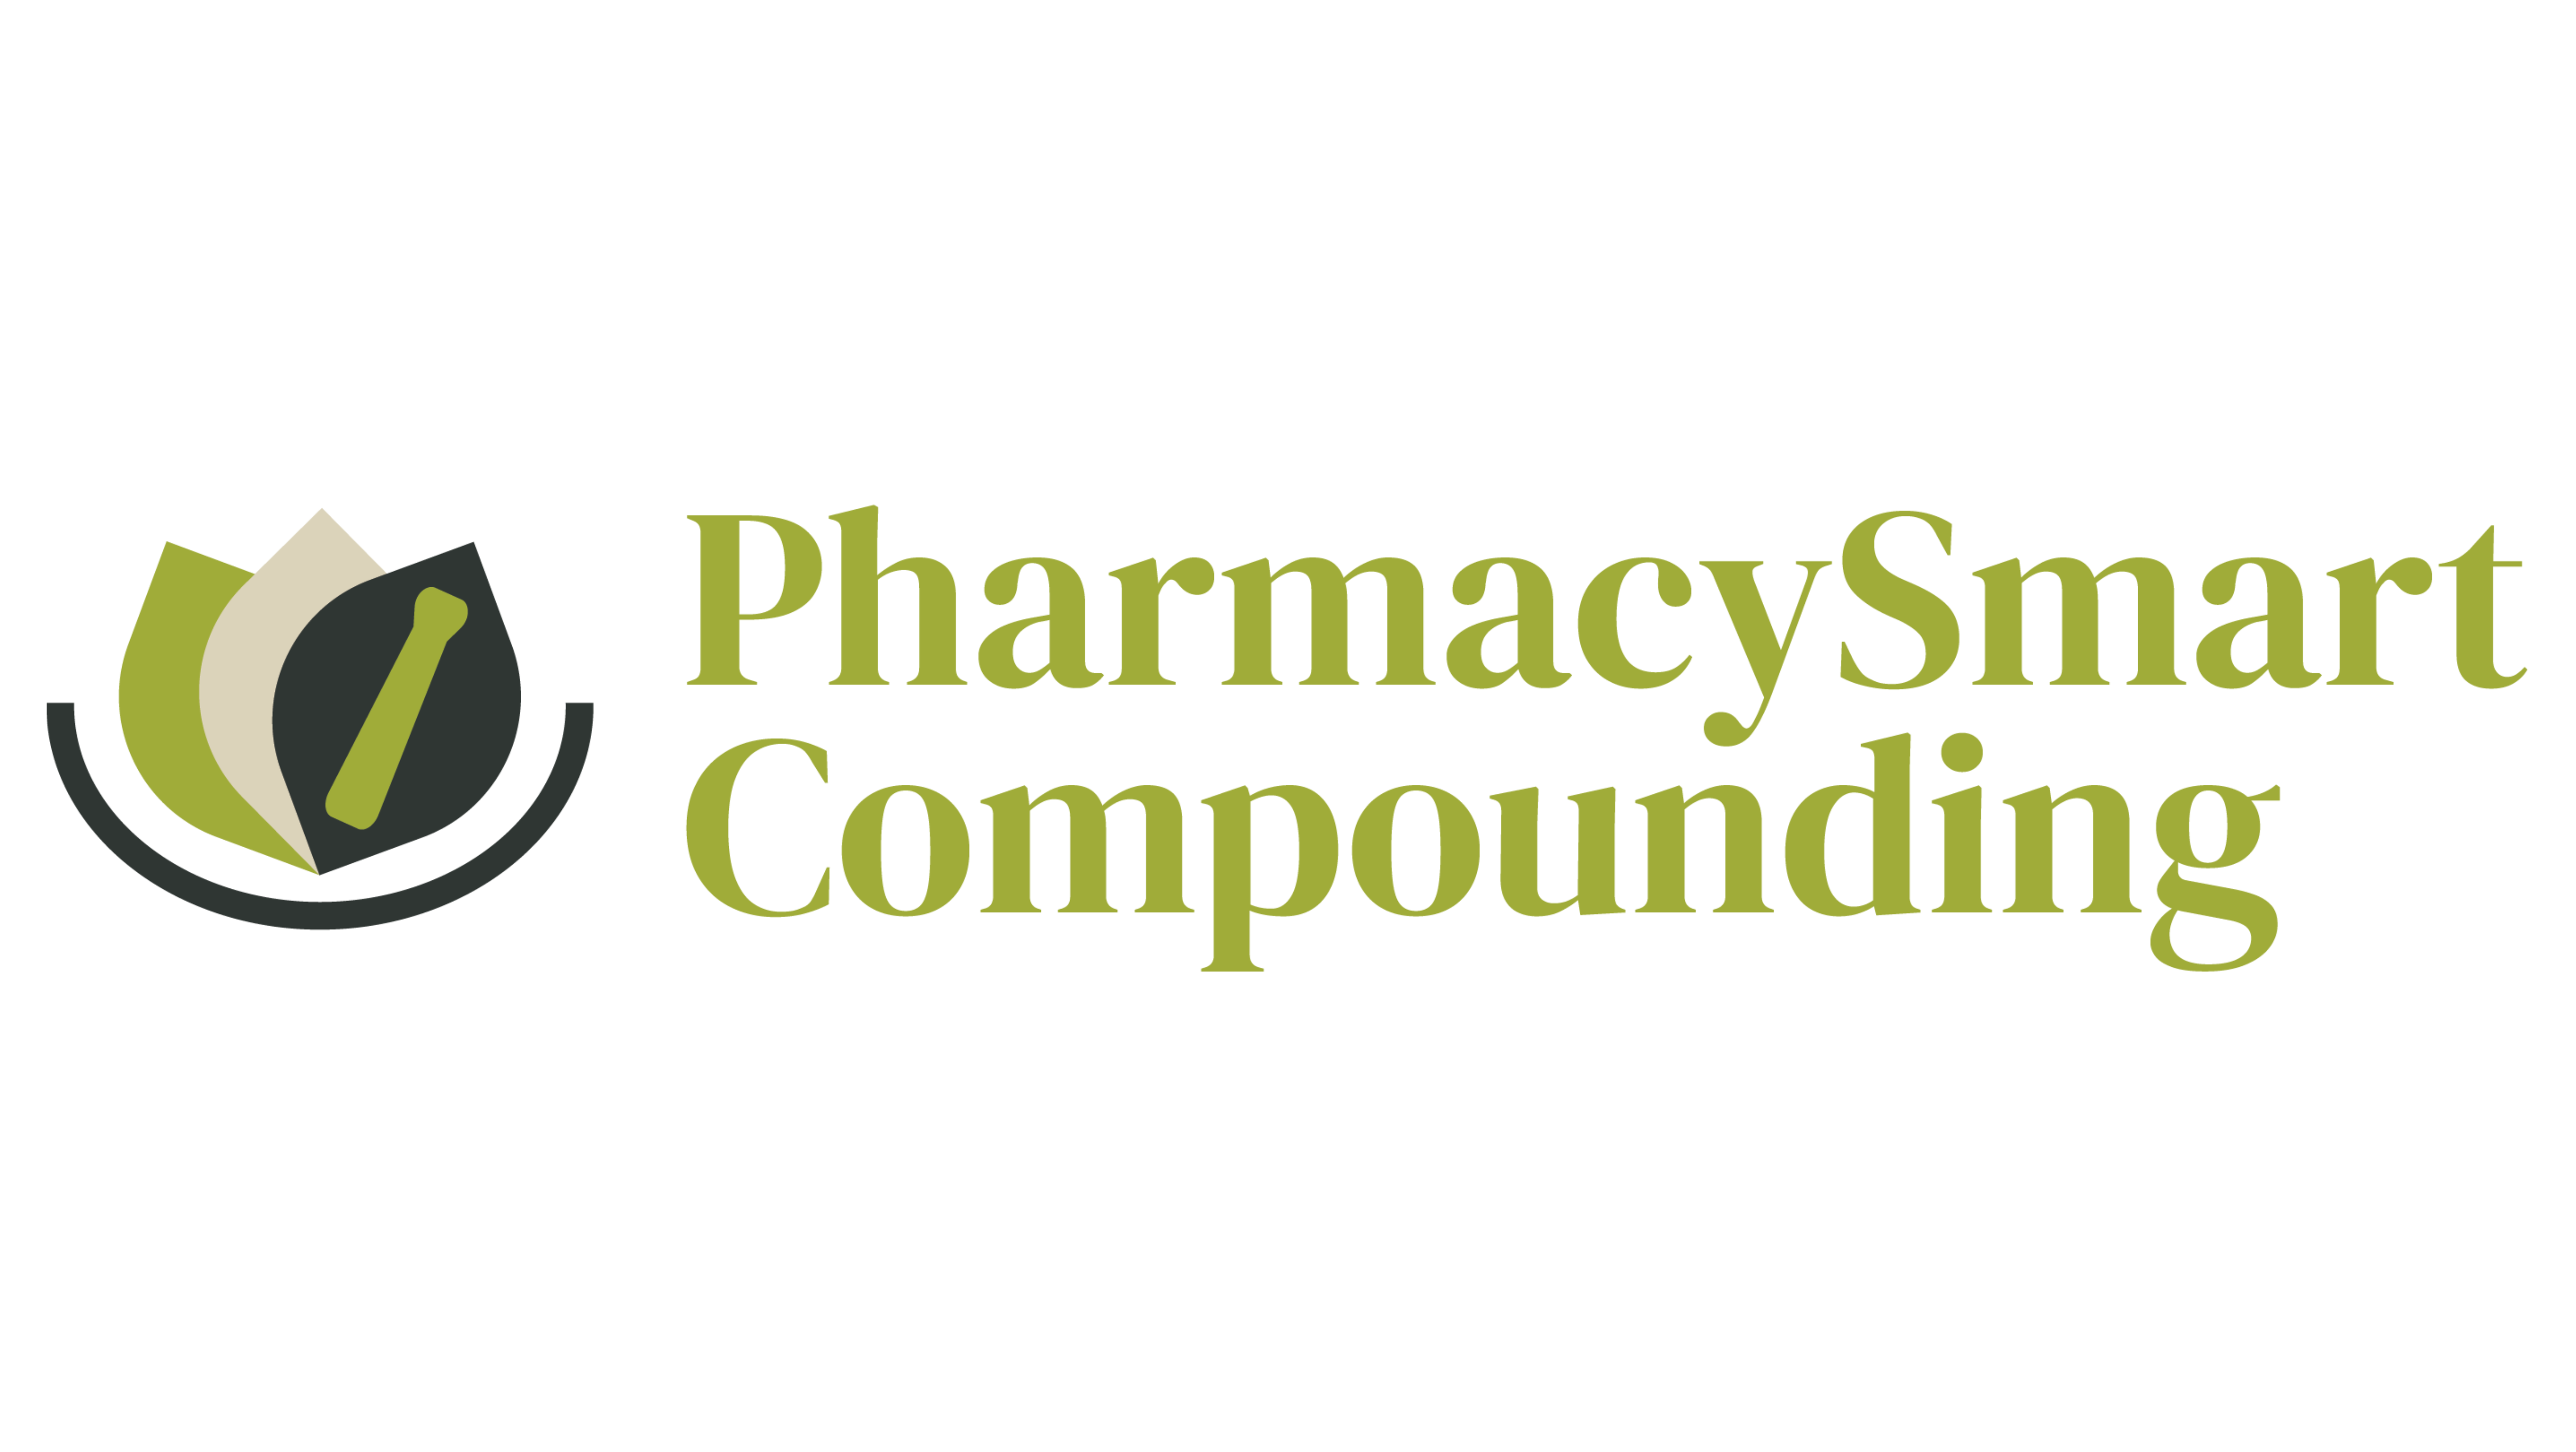 PharmacySmart Compounding